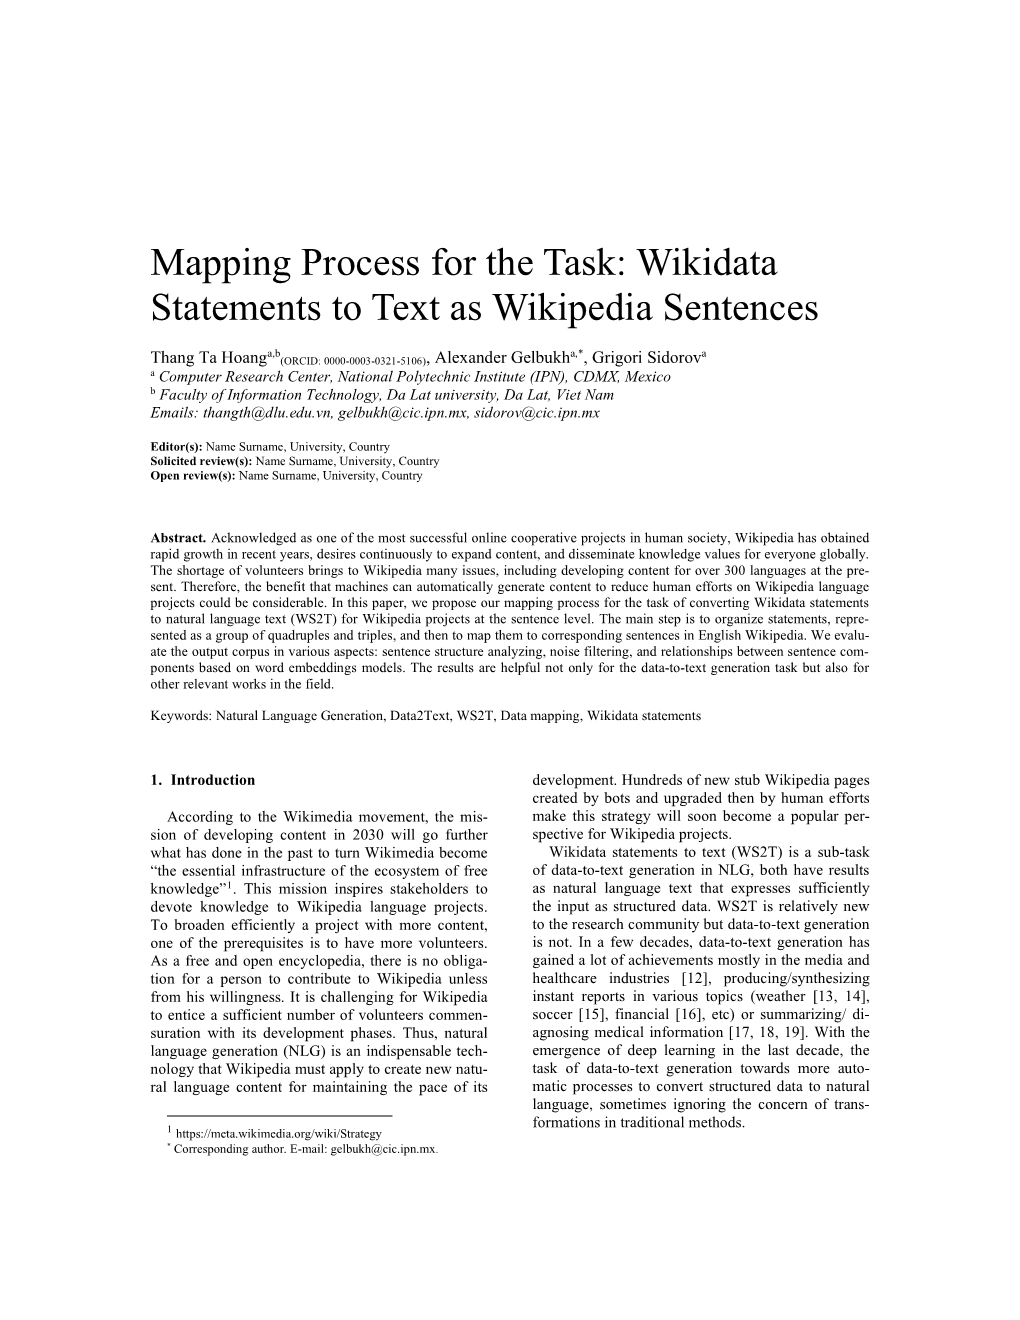 Wikidata Statements to Text As Wikipedia Sentences